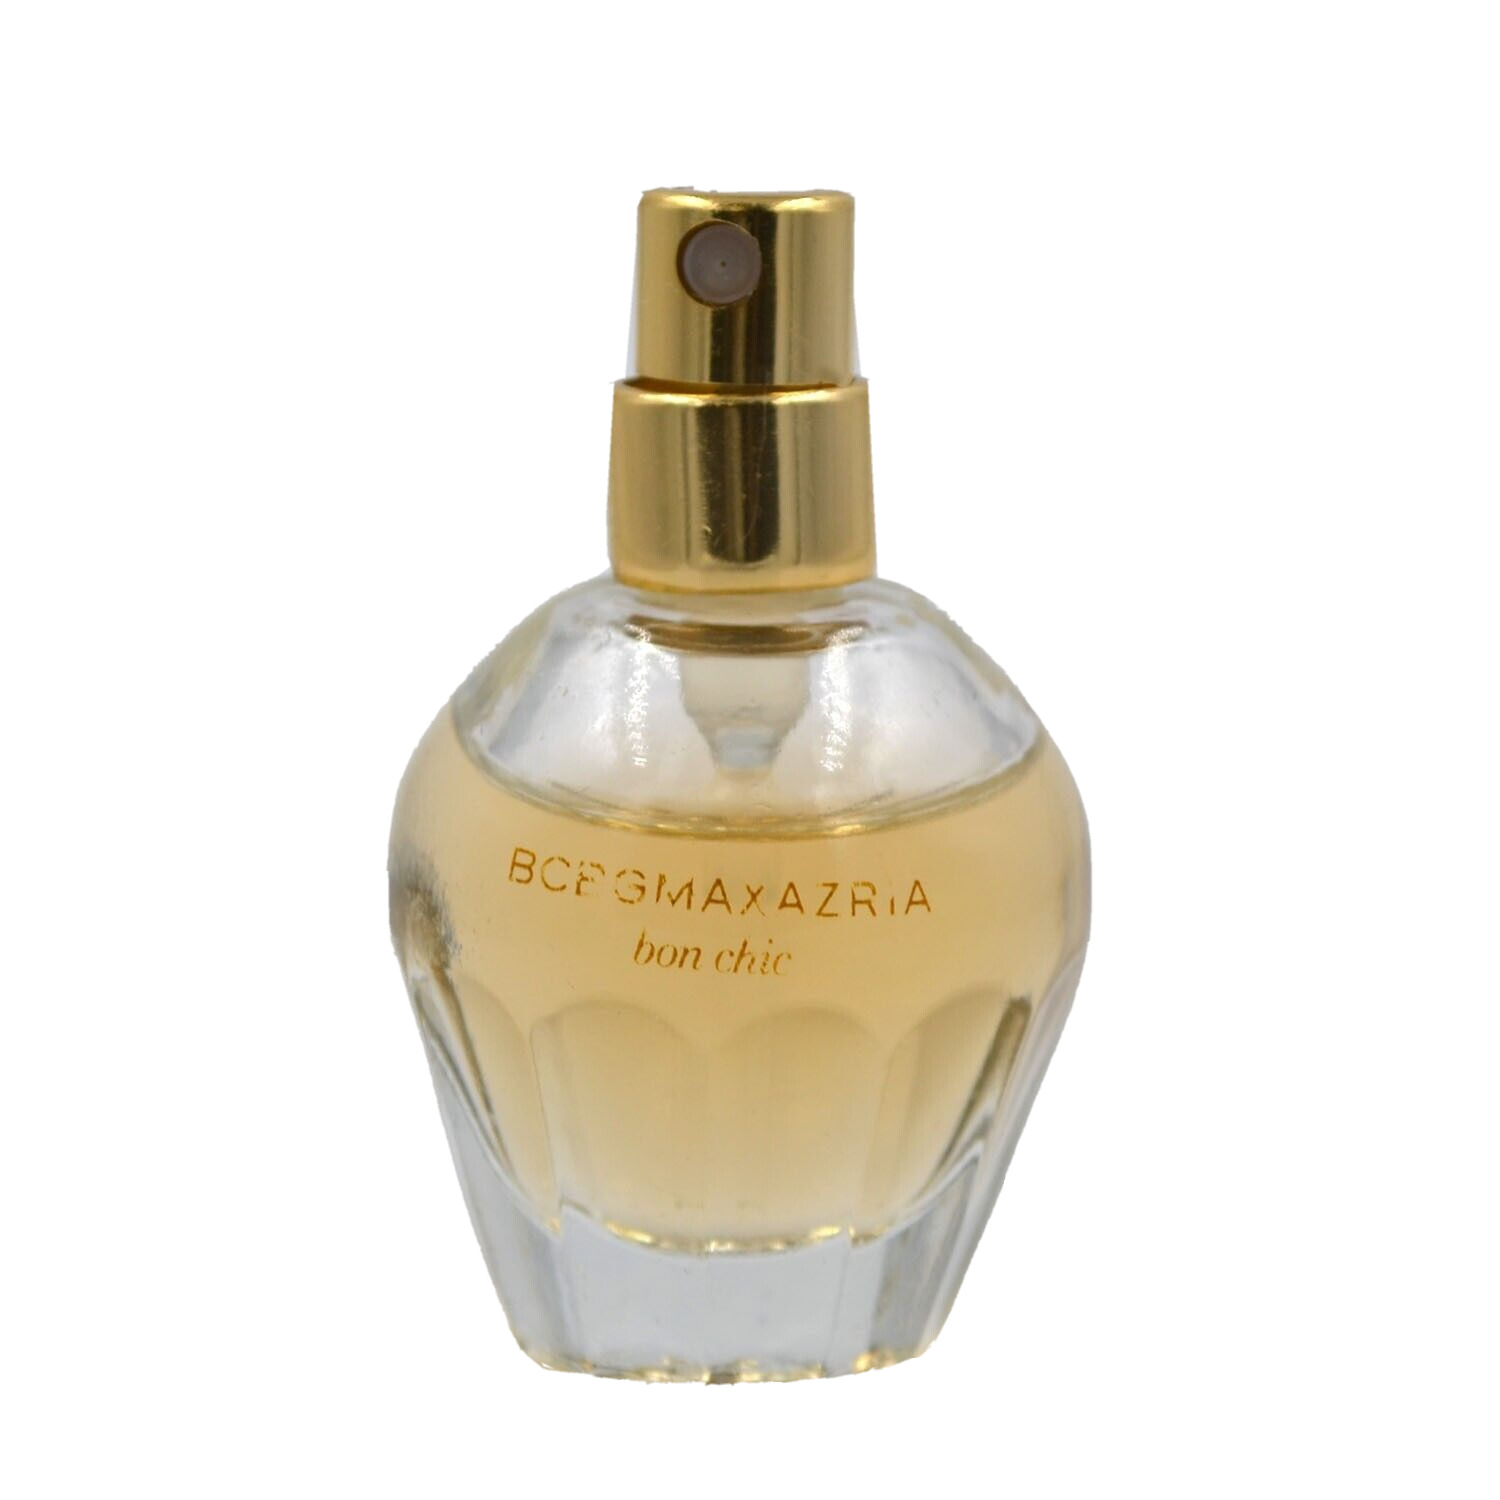 BCBG MAXAZRIA Bon Chic Eau De Parfum Spray 0.25 fl.oz